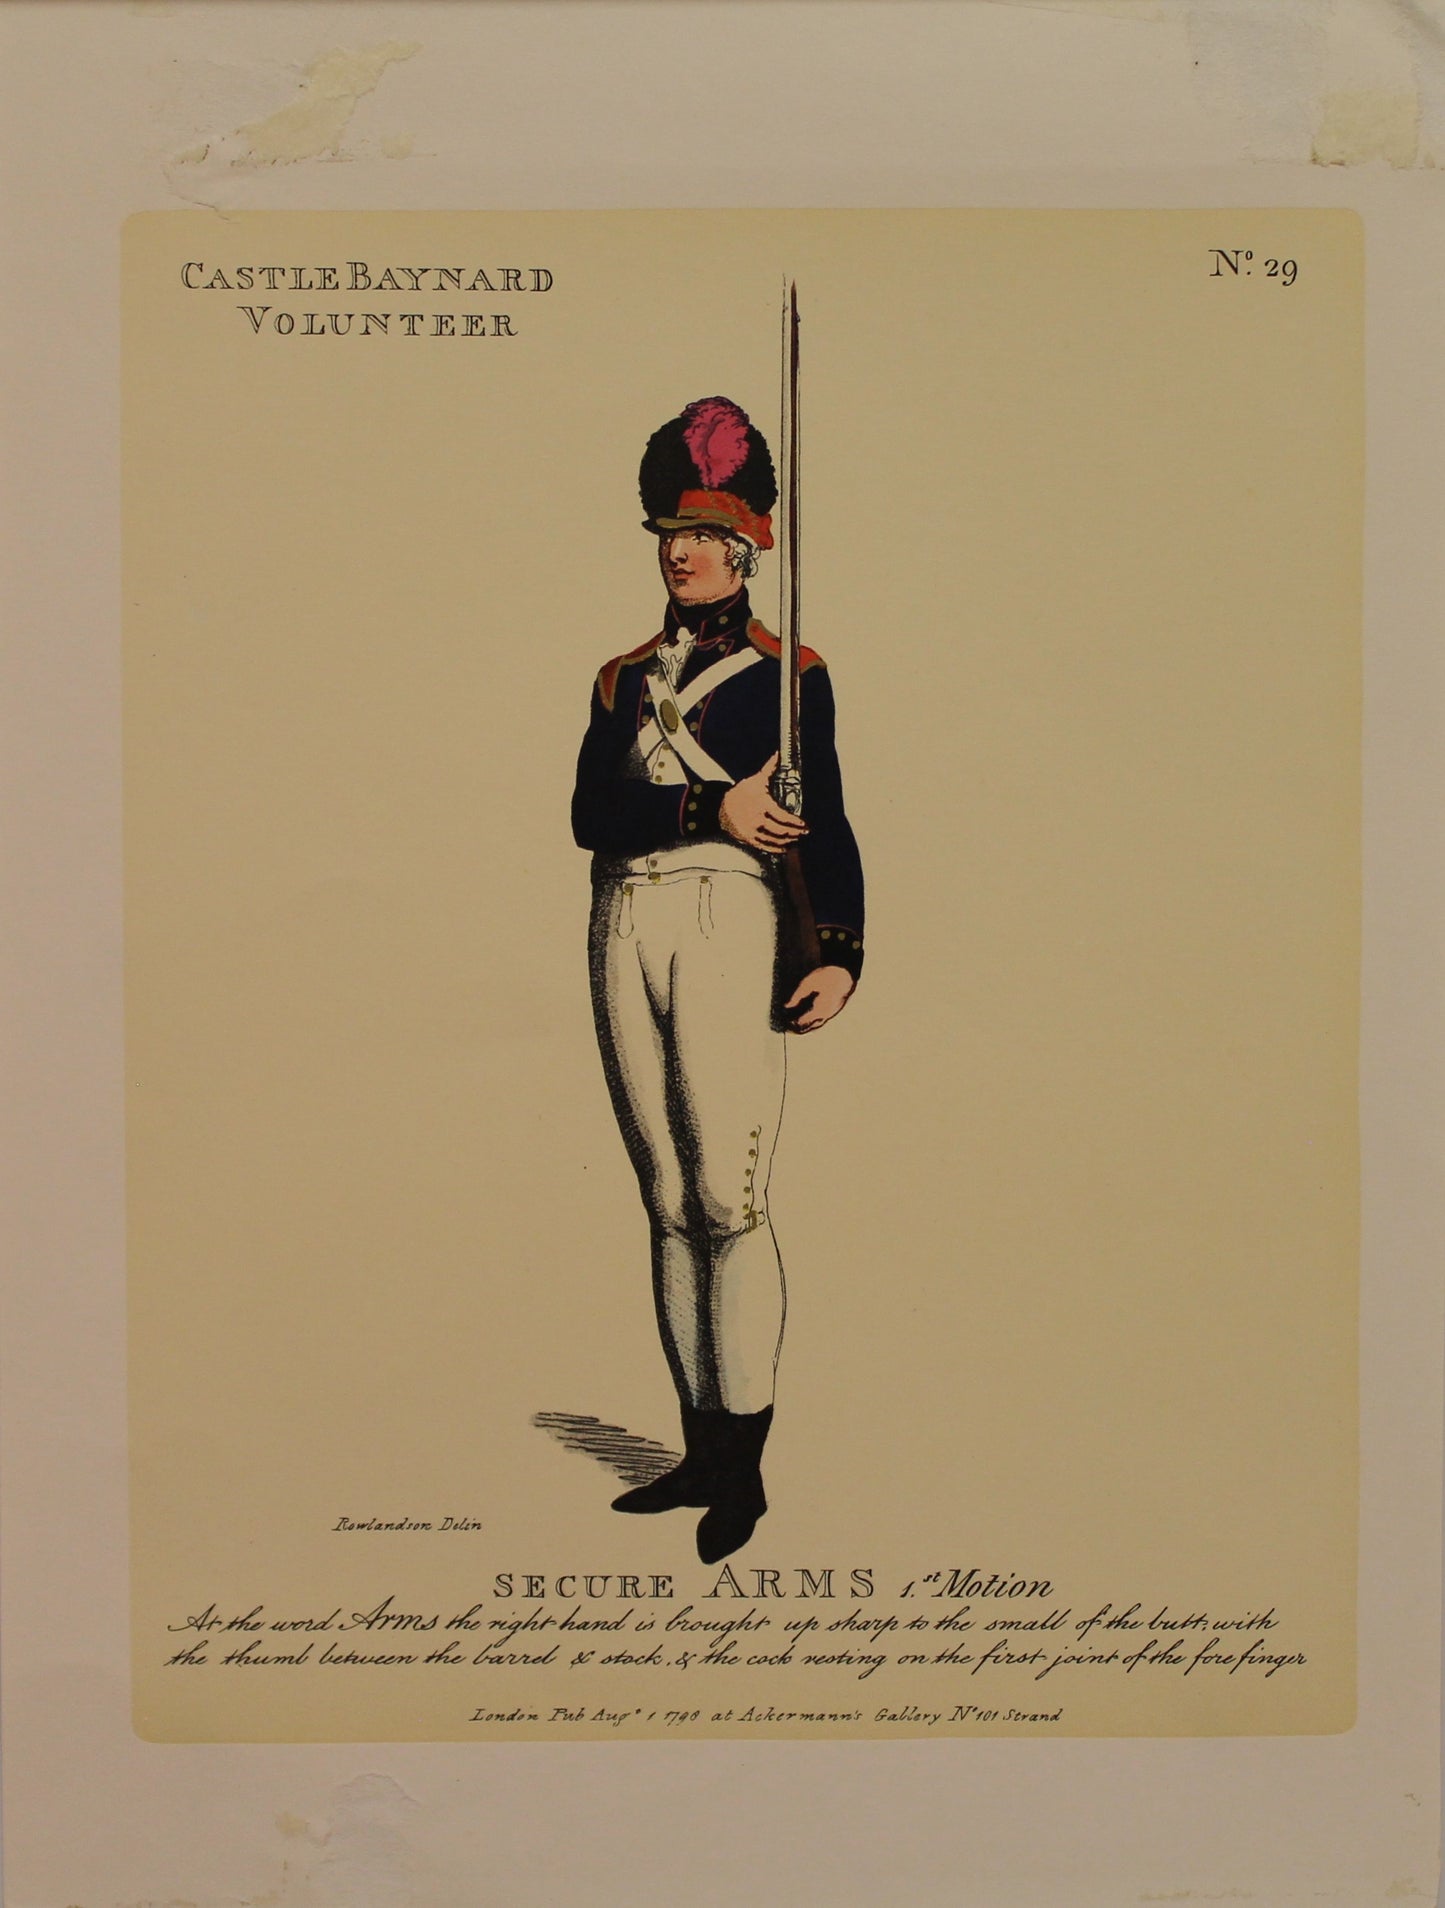 Military, Rowlandson Thomas, Castle Baynard Volunteer, Secure Arms, #29,  c1798, Reproduction